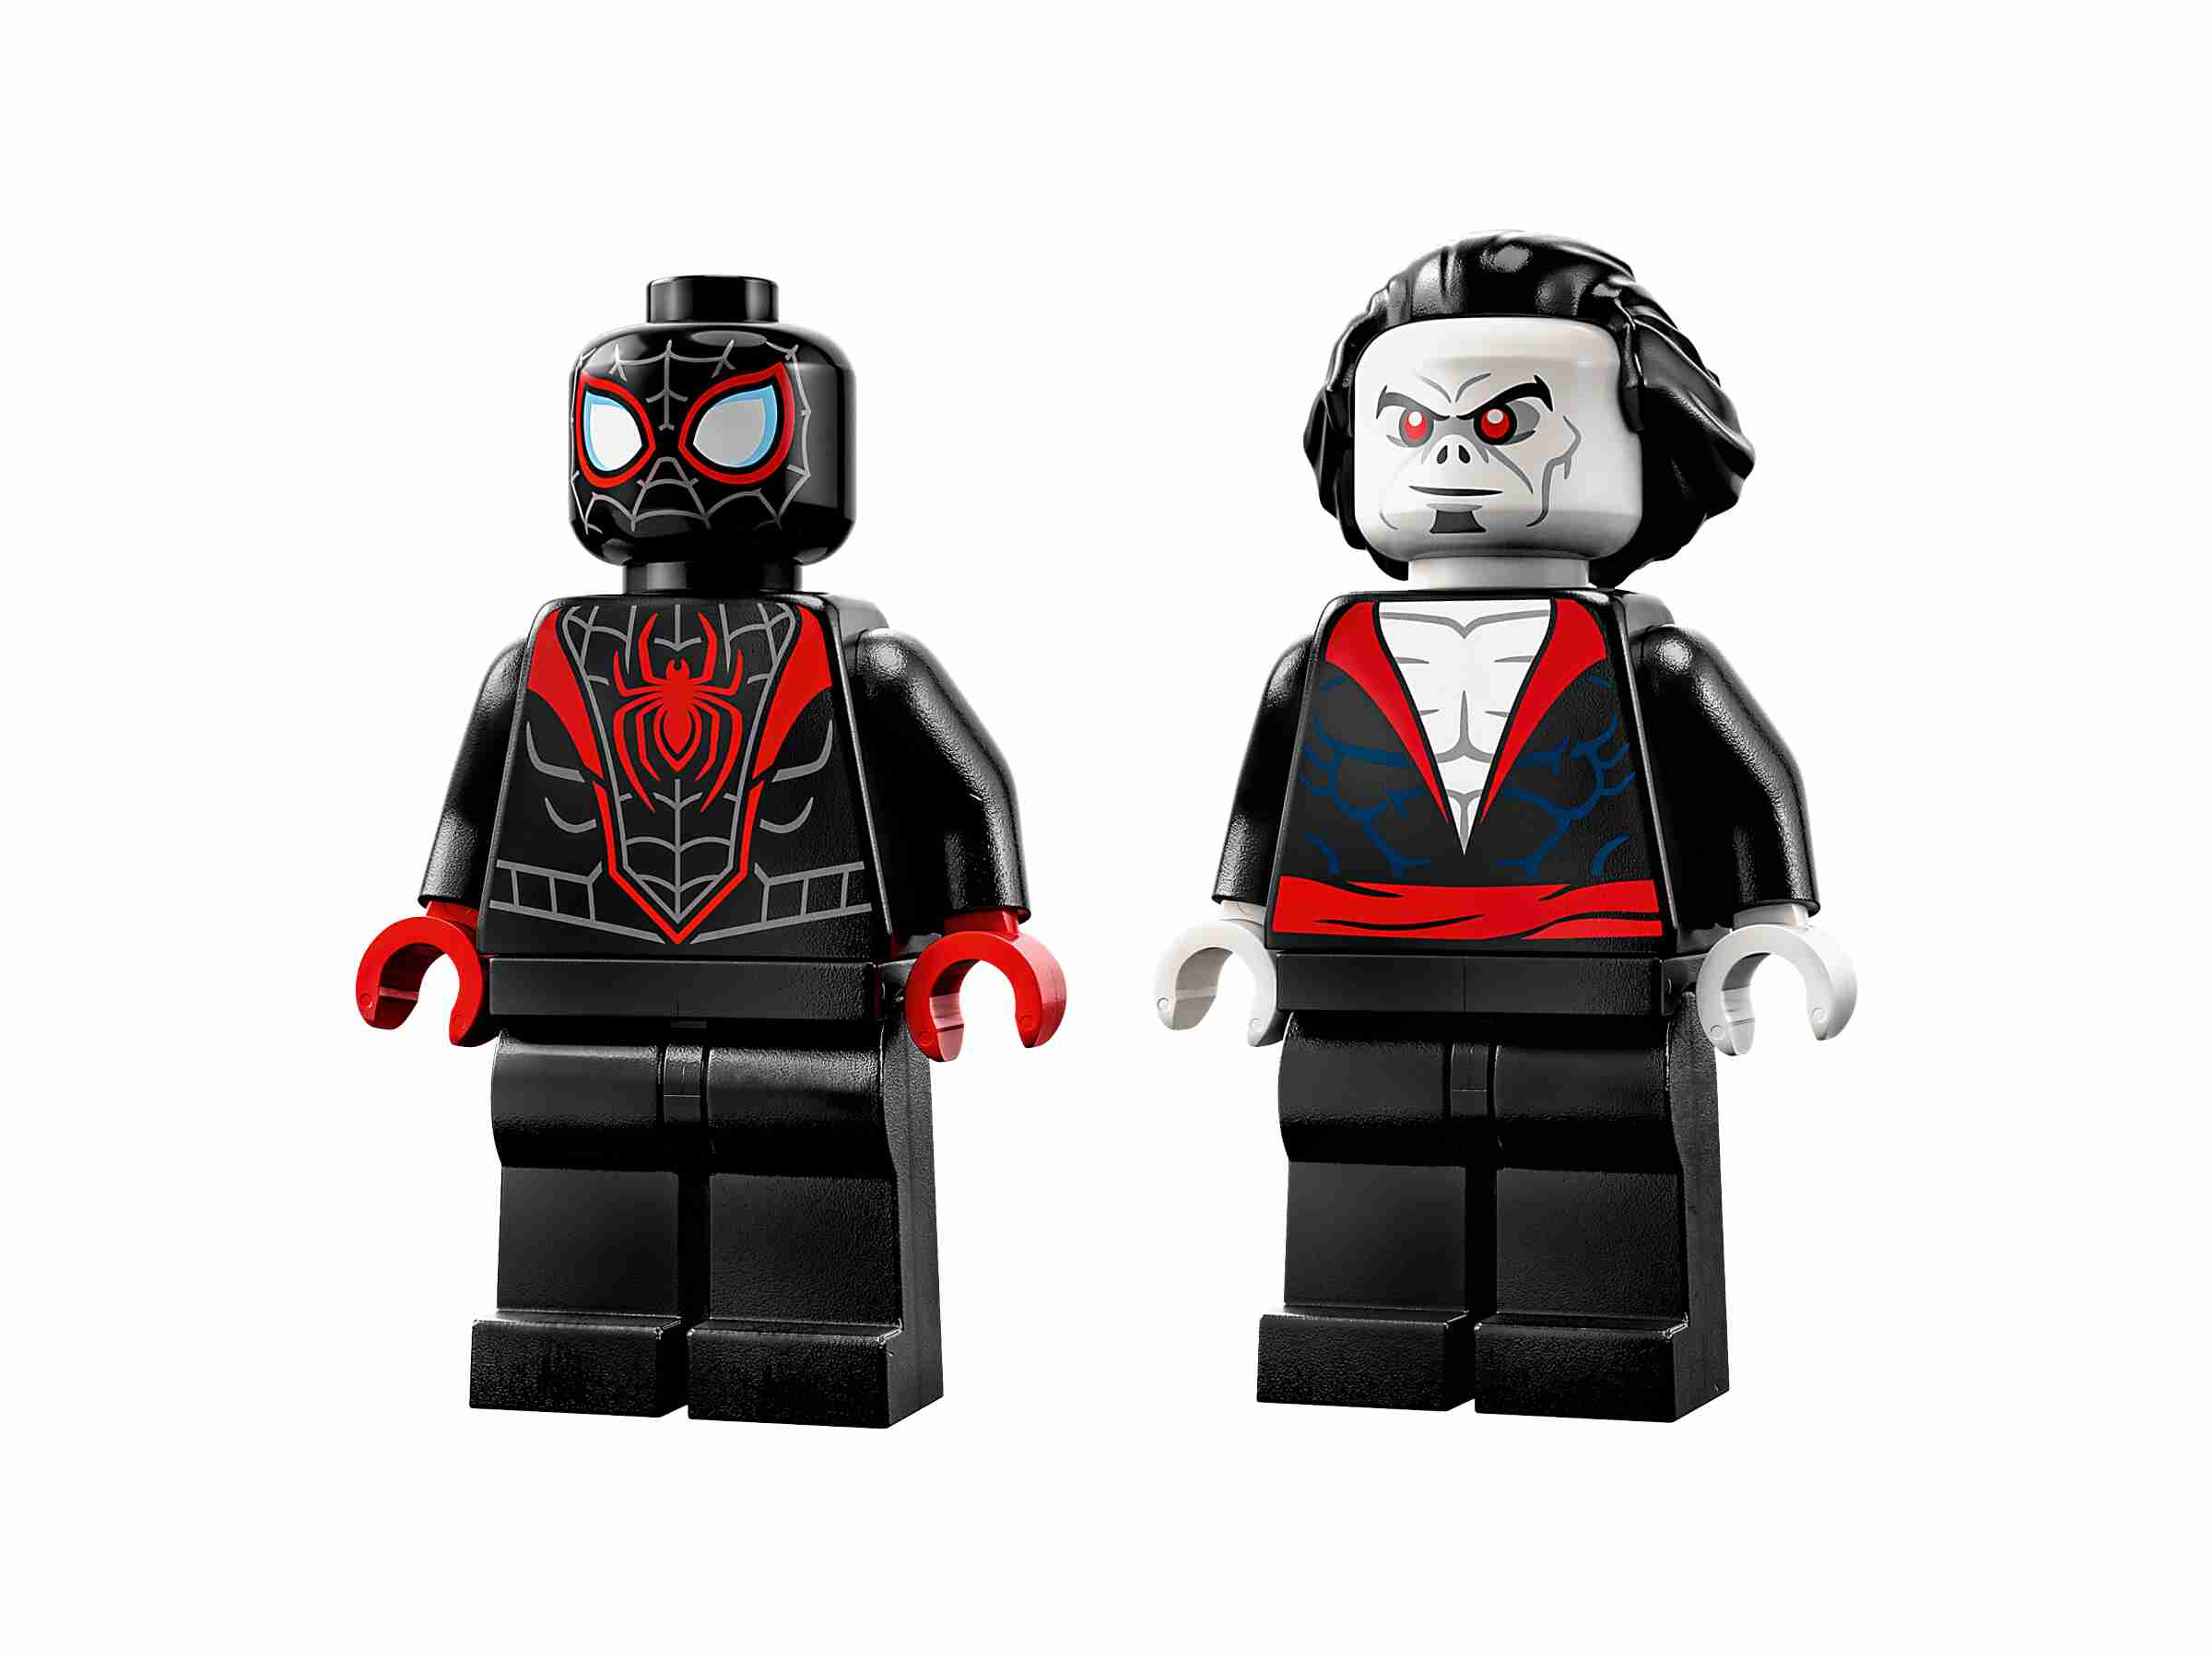 LEGO 76244 Marvel Miles Morales vs. Morbius, 2 Minifiguren, Superrennwagen